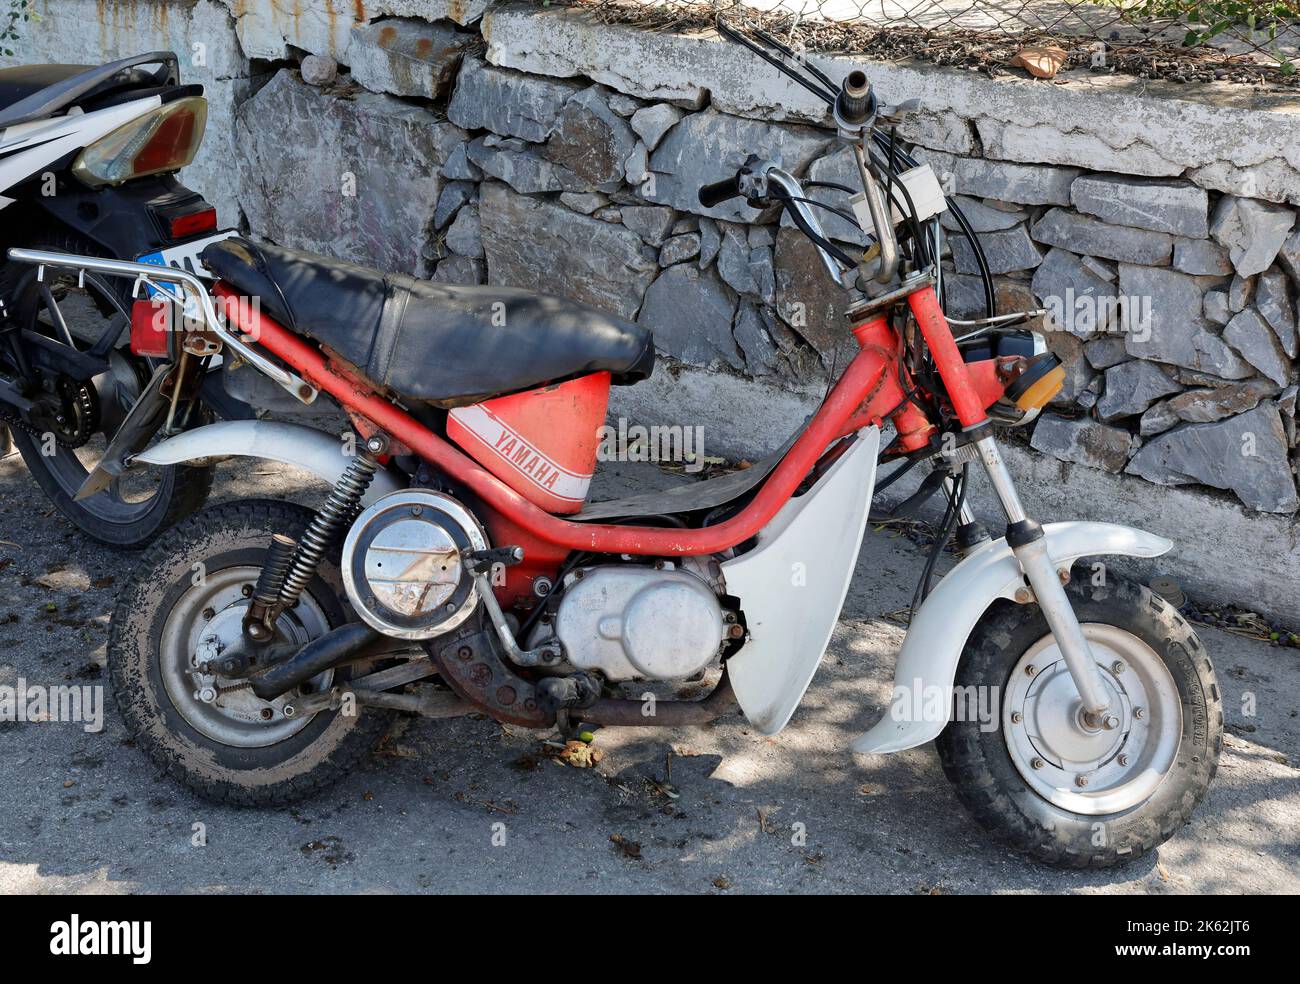 Old yamaha bike hi-res stock photography and images - Alamy